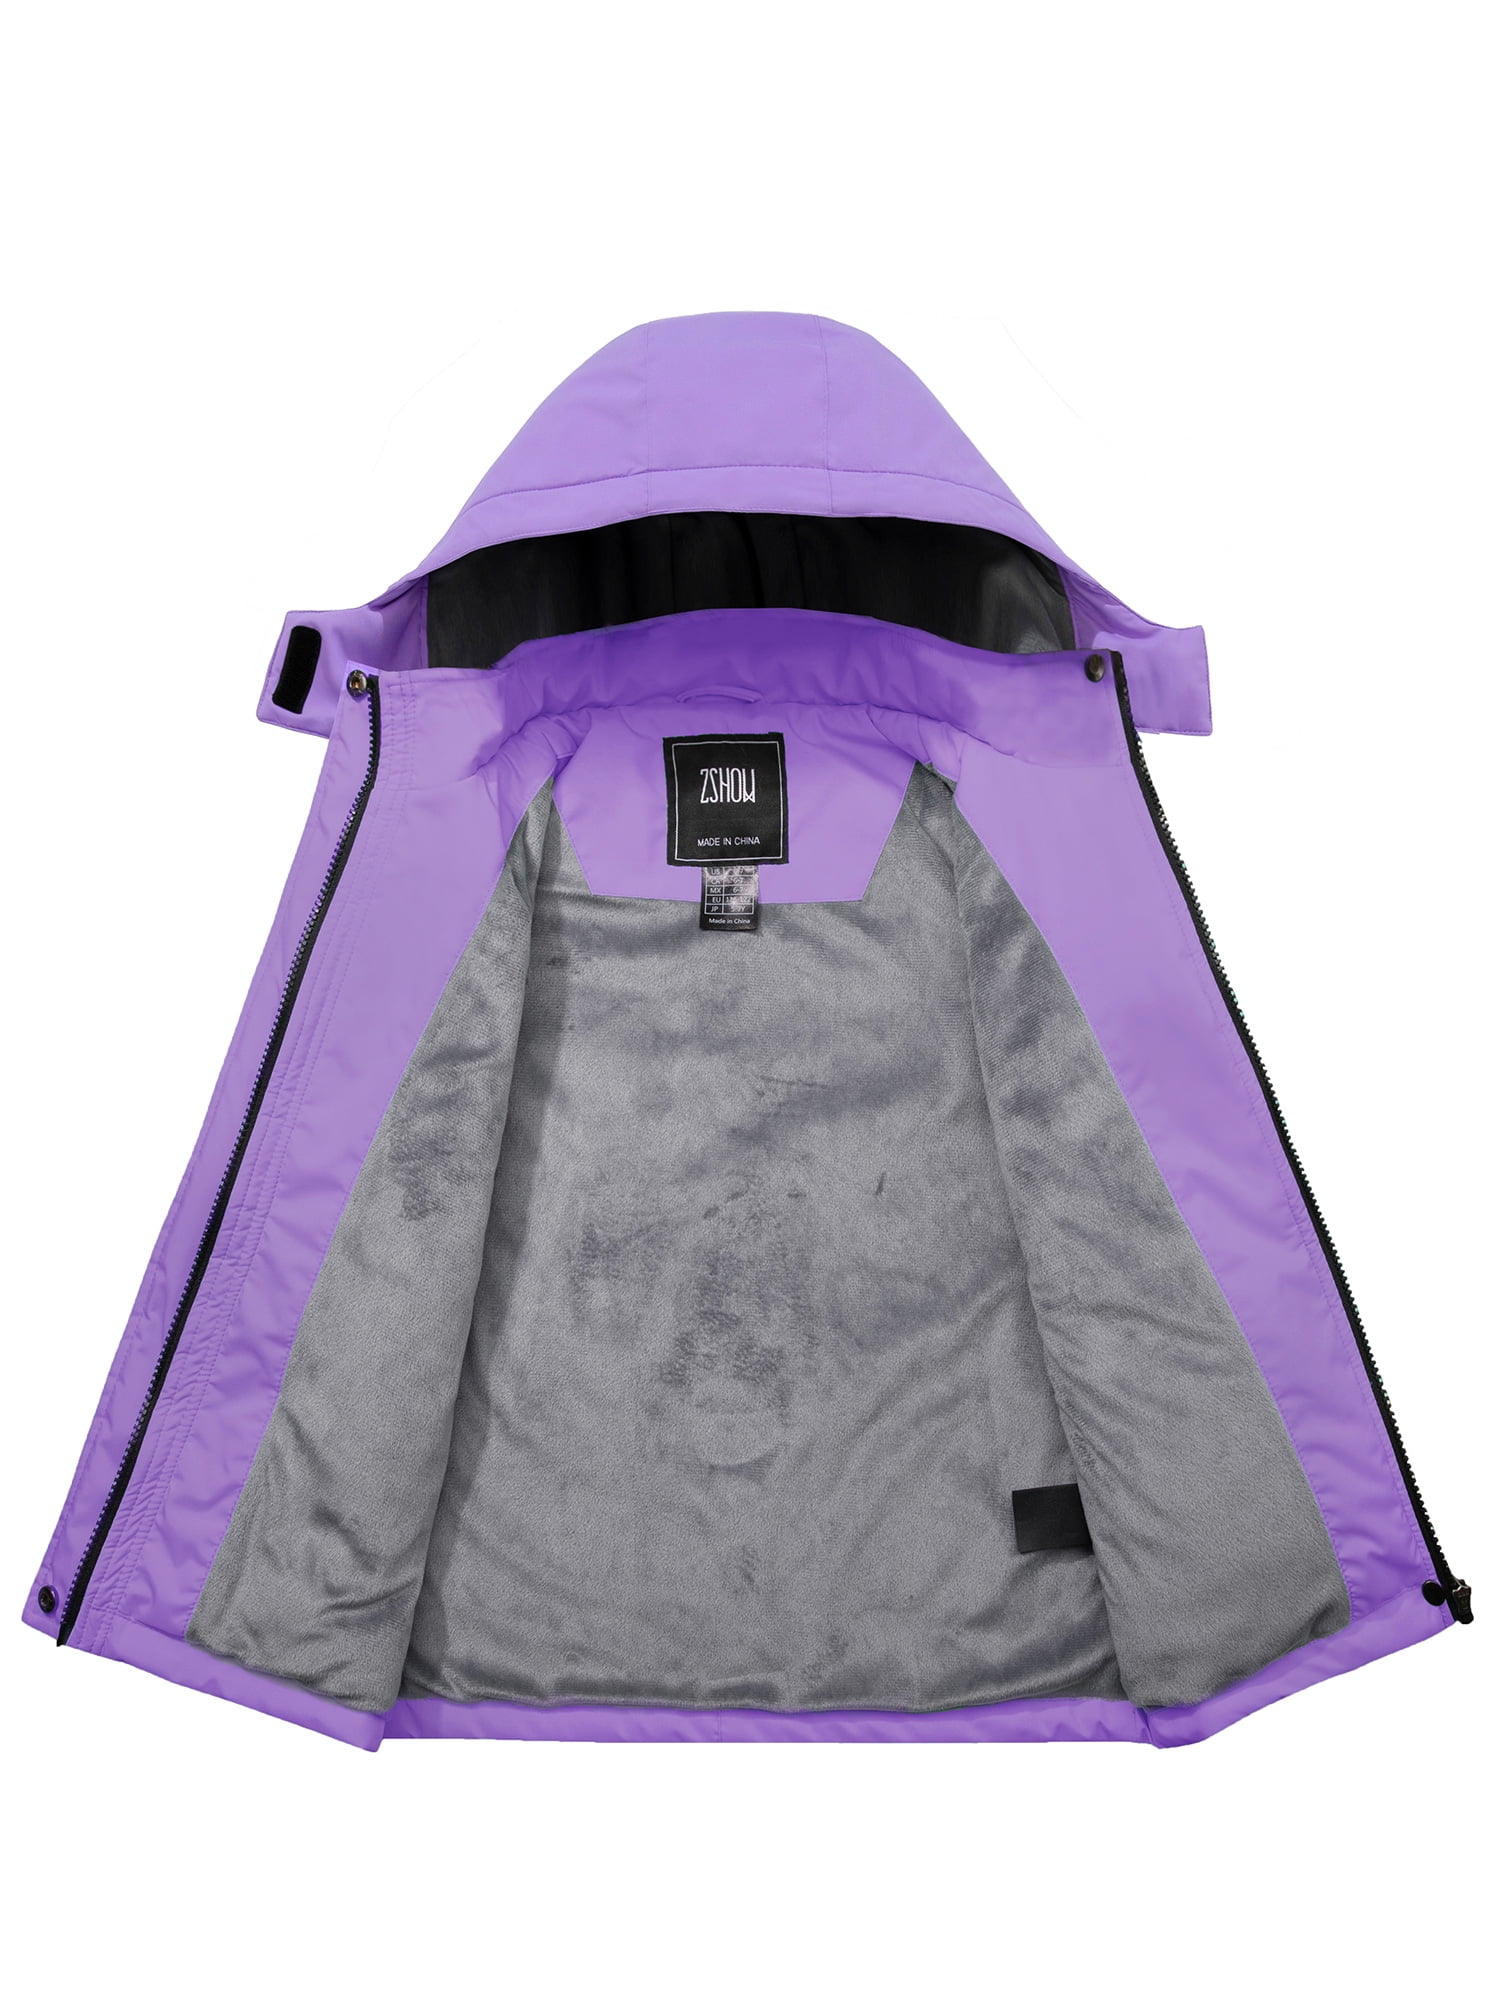 ZSHOW Girl's Snow Coat Waterproof Mountain Ski Jacket Hooded Rain Coat  Purple 14/16